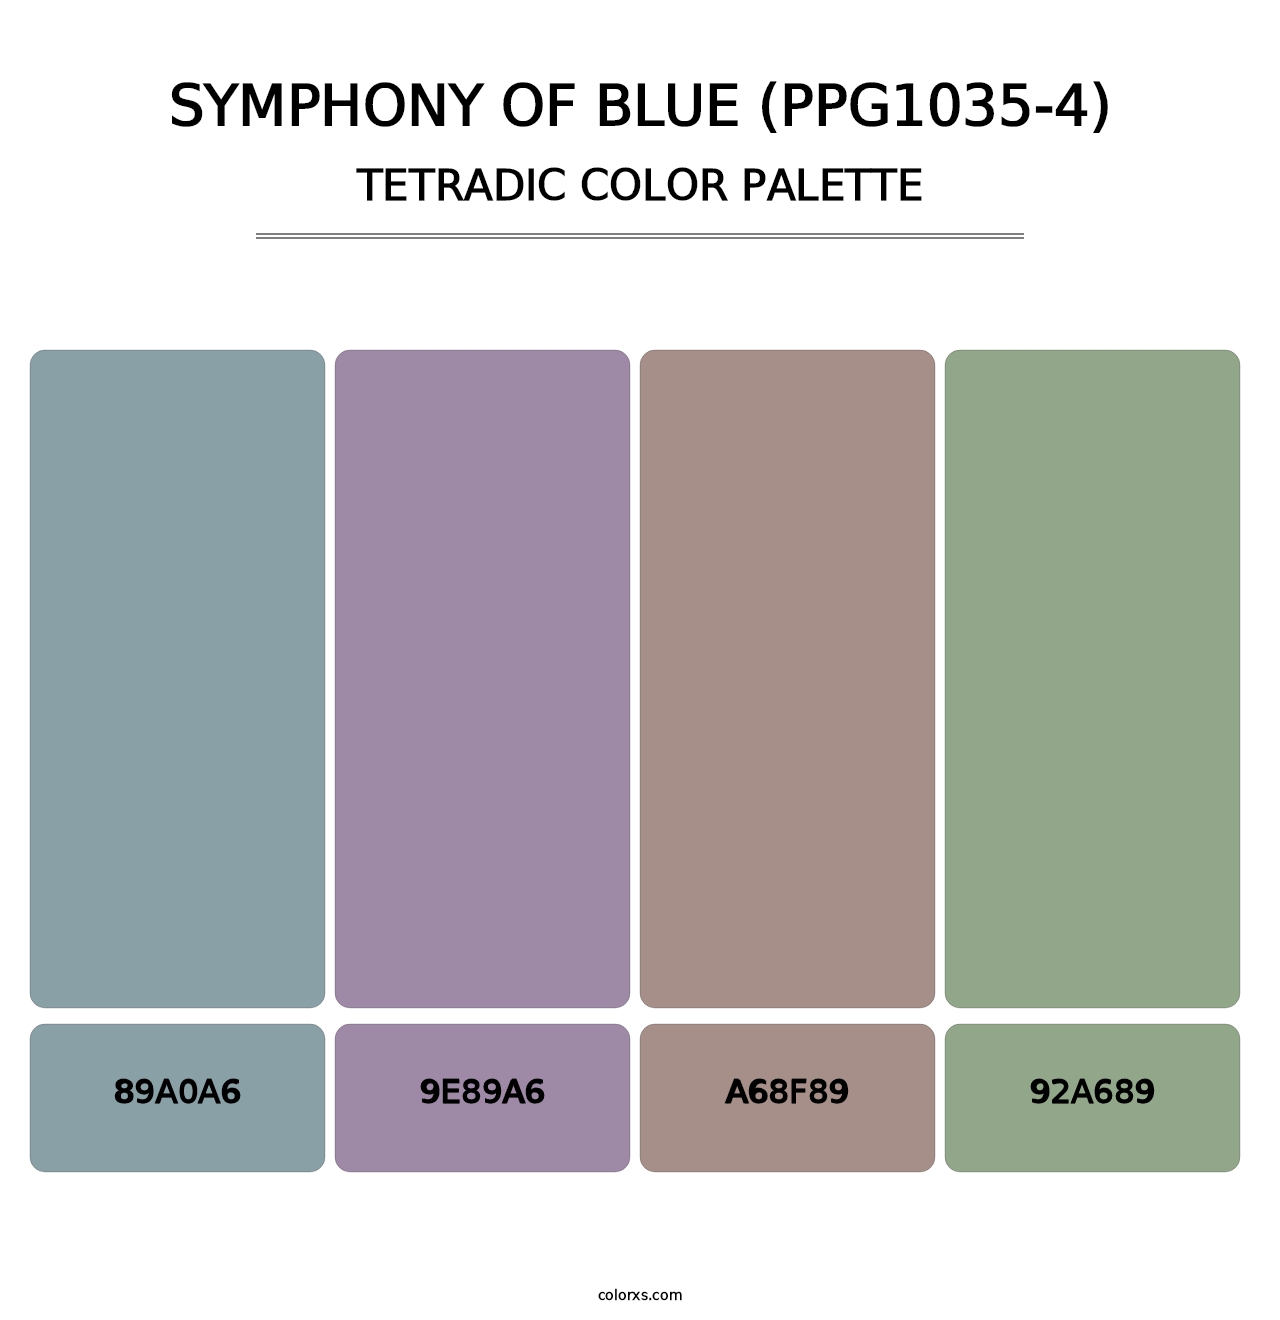 Symphony Of Blue (PPG1035-4) - Tetradic Color Palette